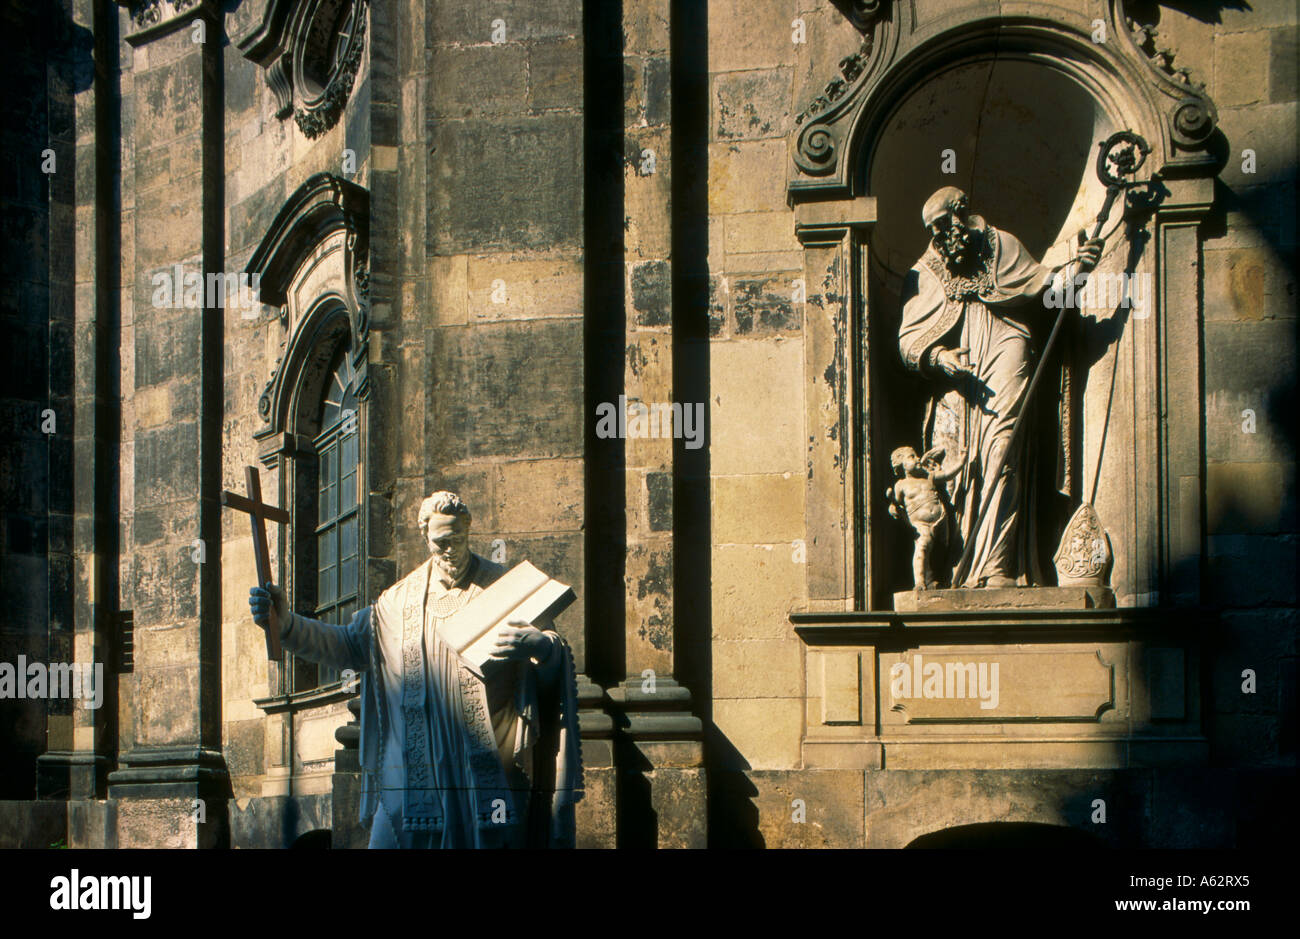 Statues in cathedral, Katholische Hofkirche, Altstadt, Dresden, Saxony, Germany Stock Photo